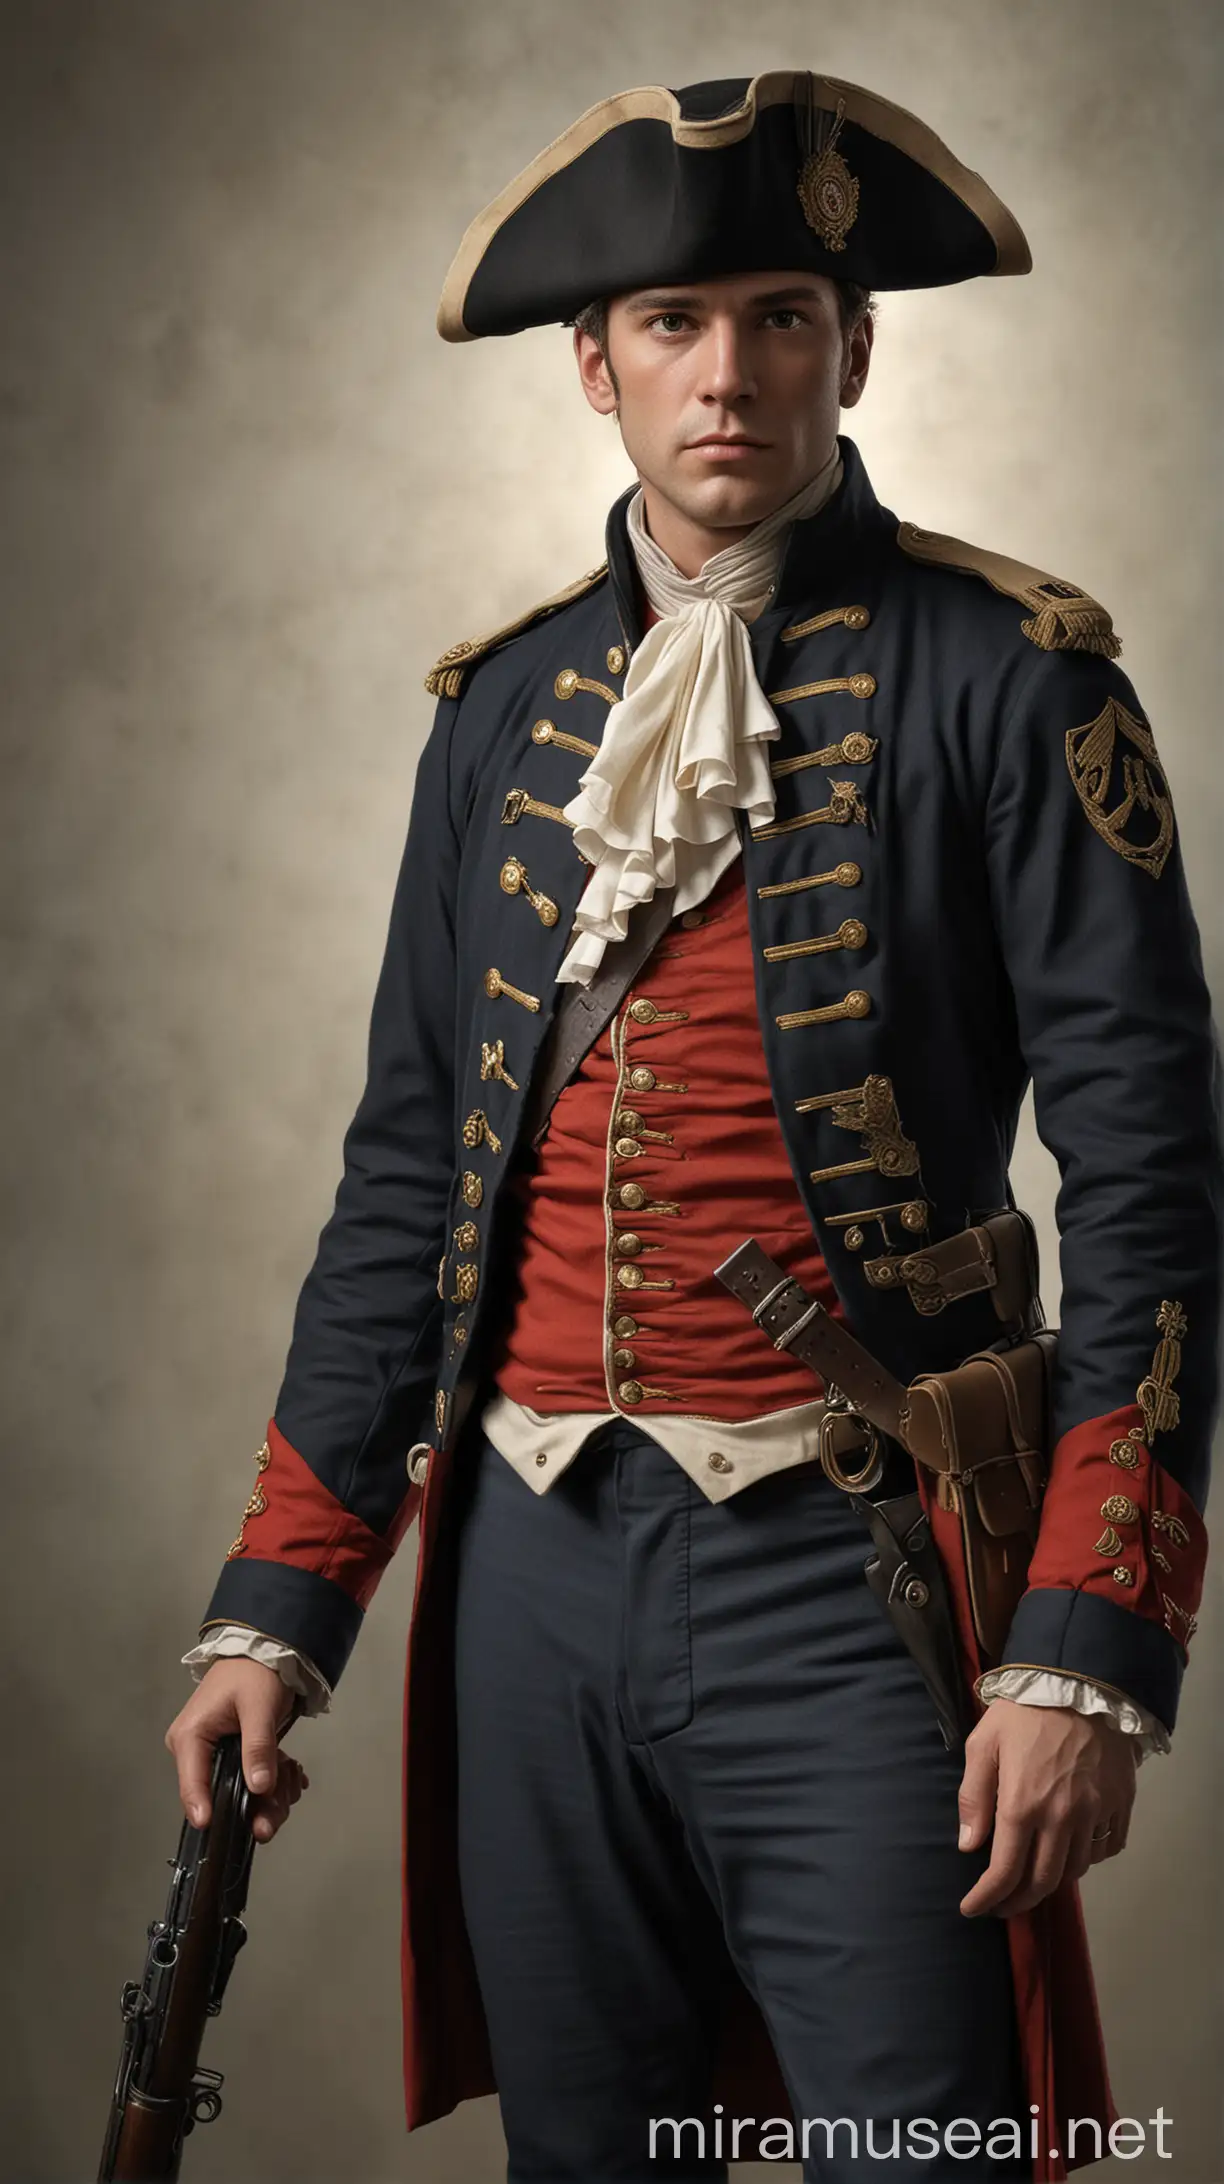 Houston Soldier War of 1812 Period Military Uniform Hyper Realistic Art